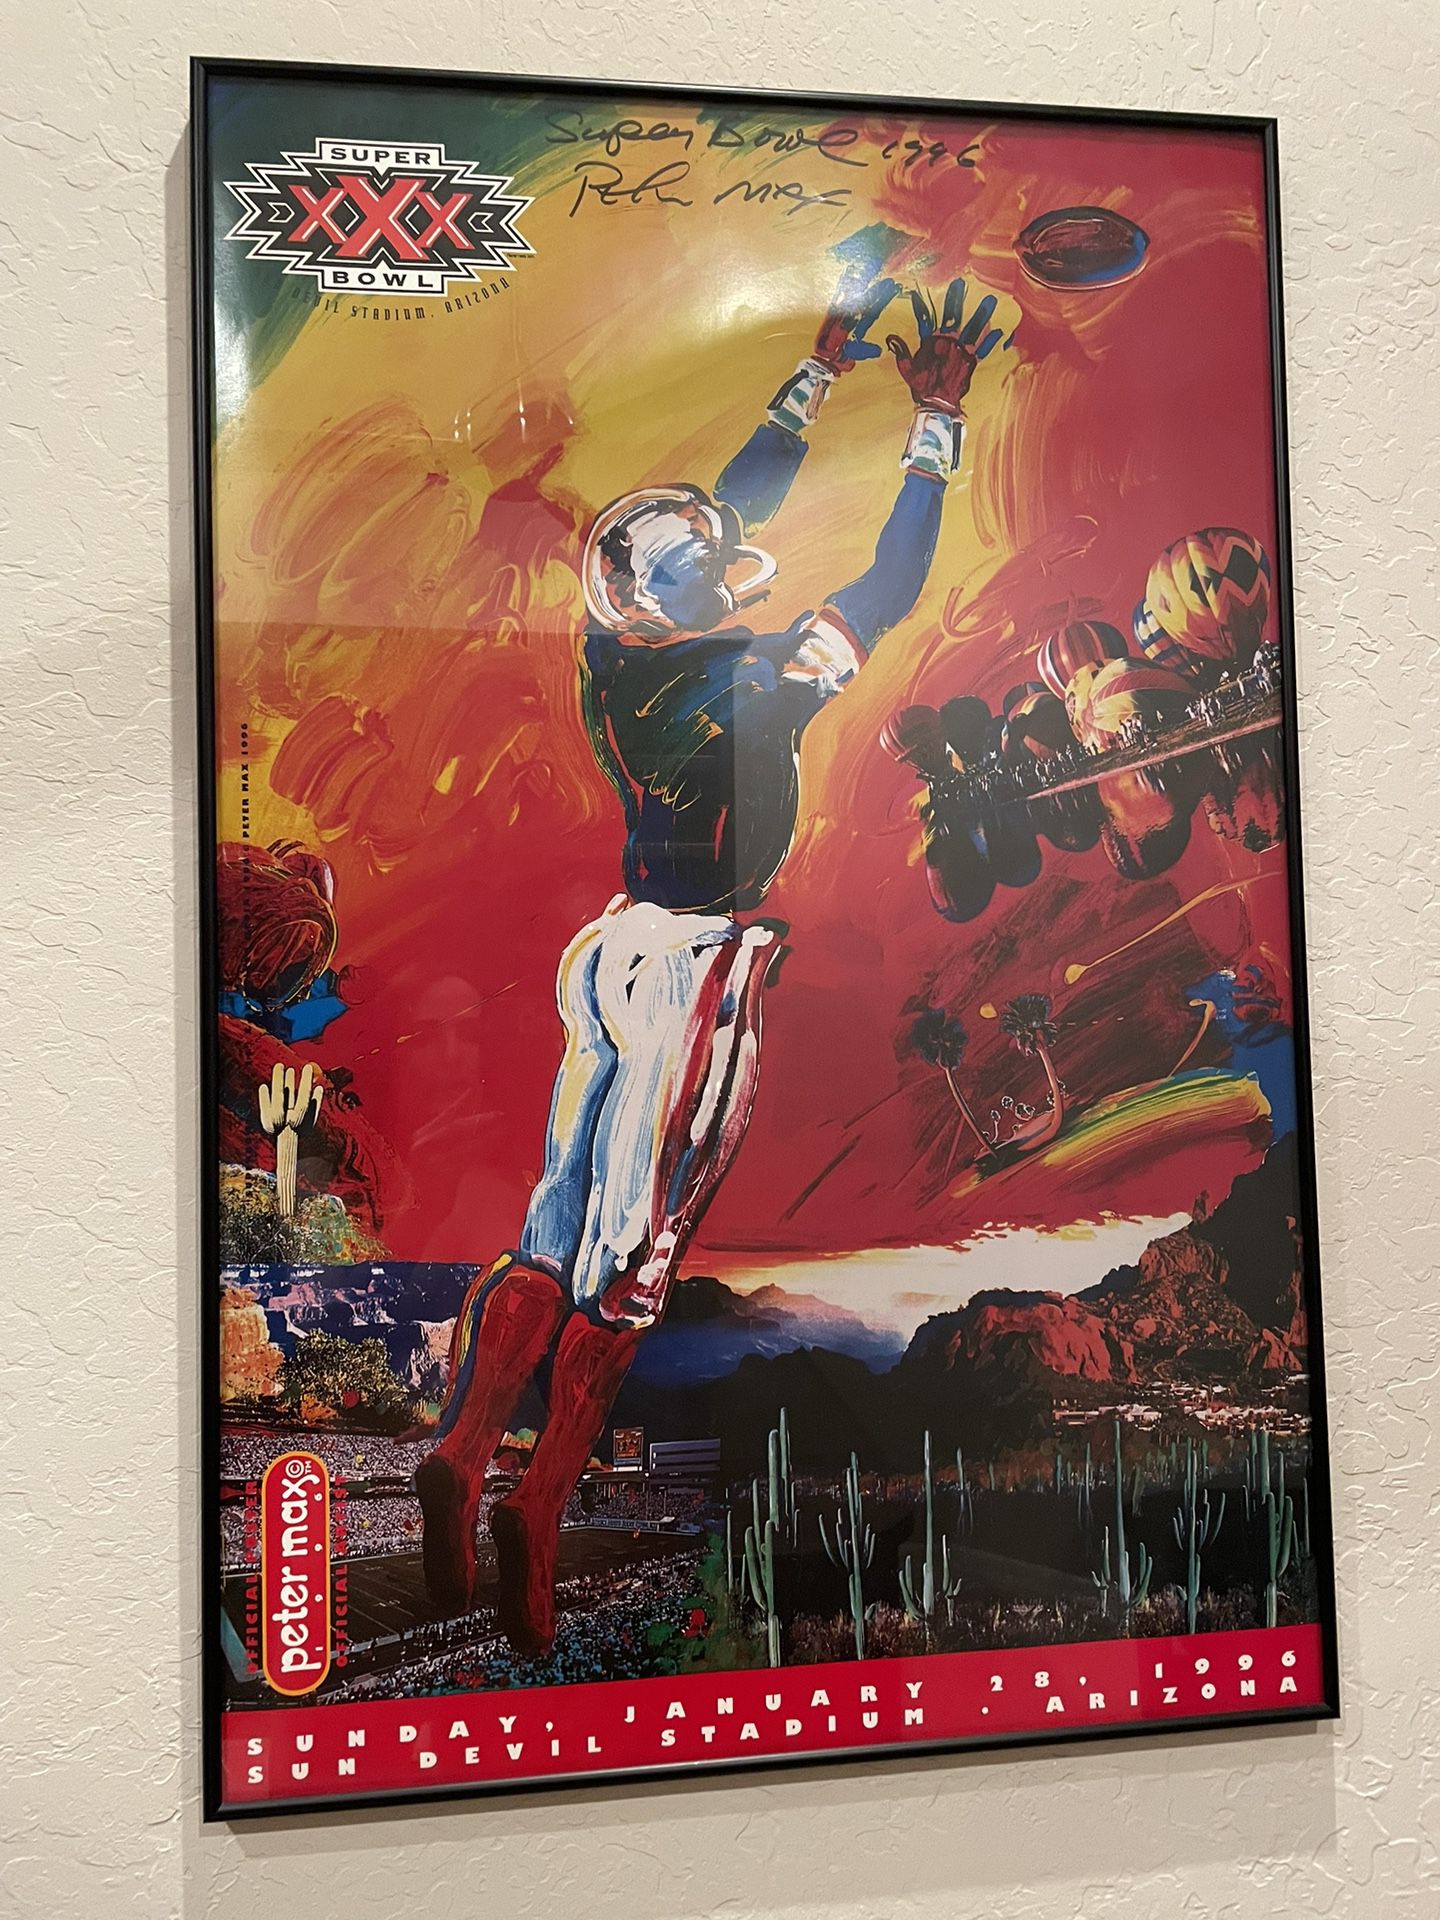 Super Bowl 1996 Peter Max Poster - Signed 